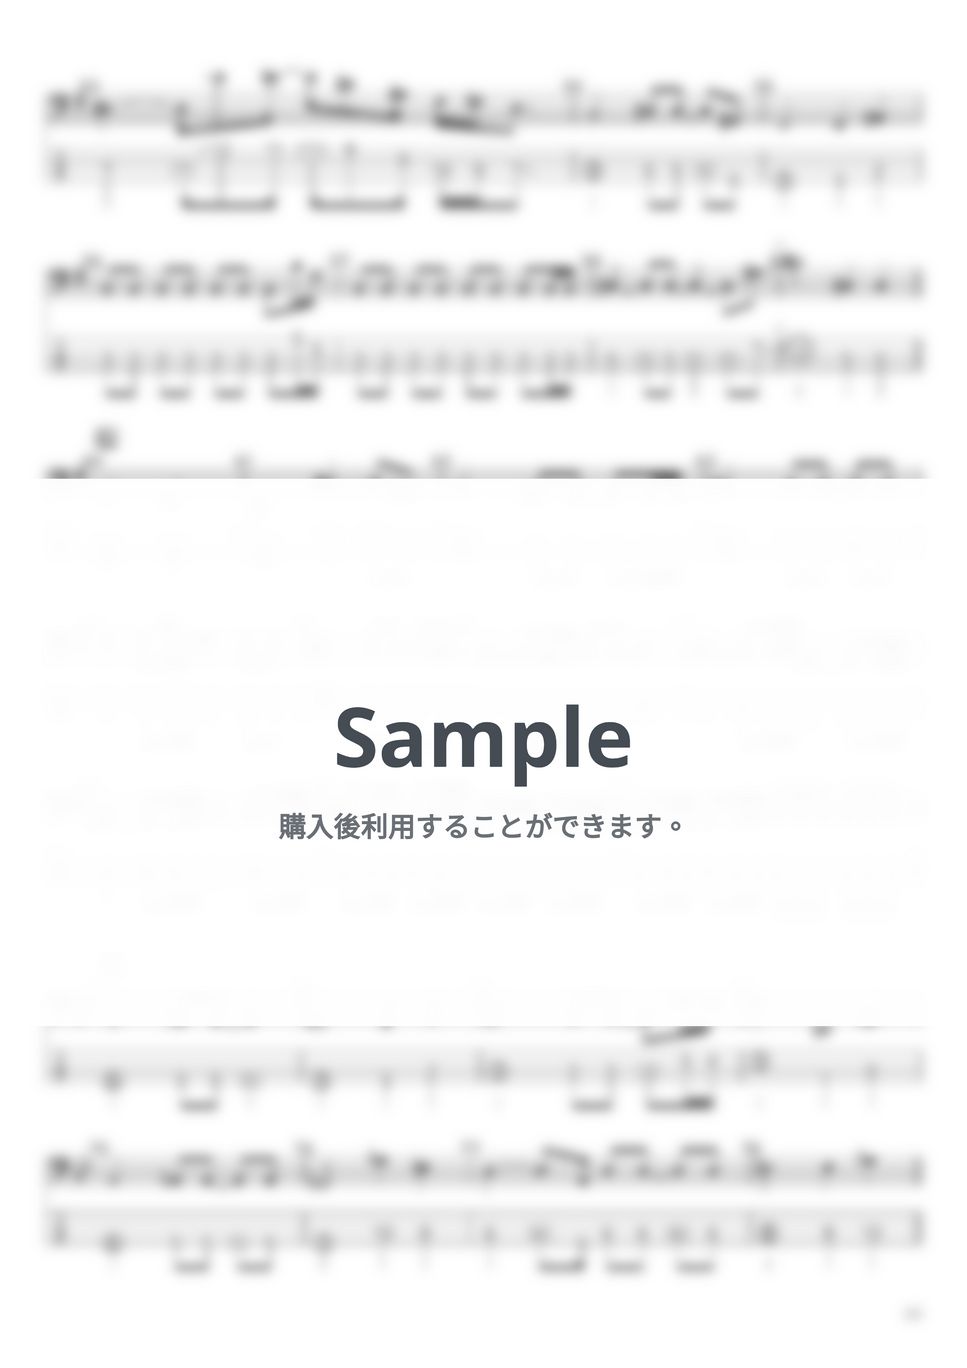 X JAPAN - Say Anithing by たぶべー@財布に優しいベース用楽譜屋さん